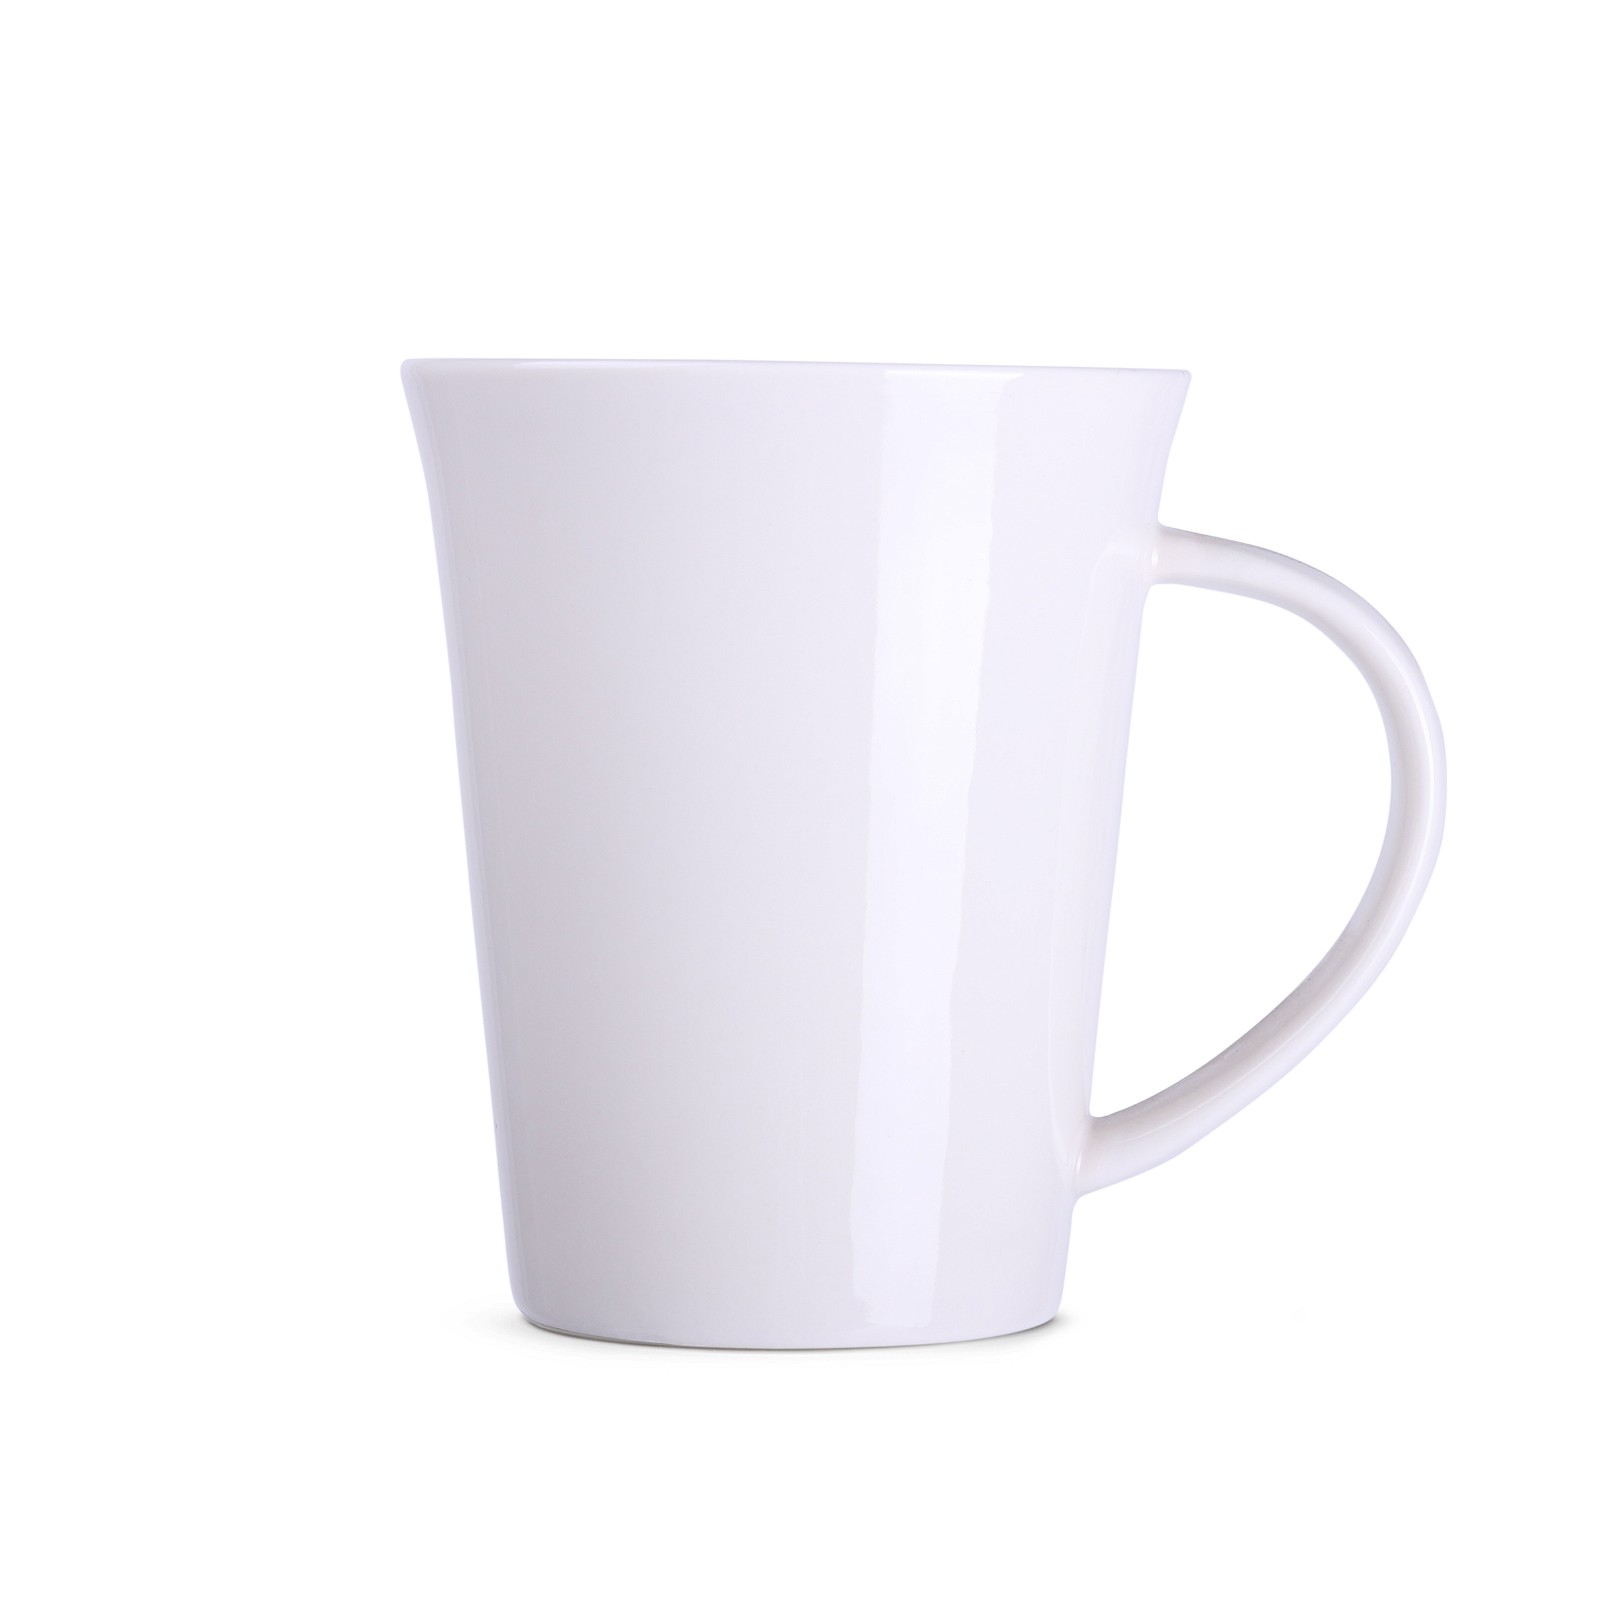 mug trend 350ml with logo